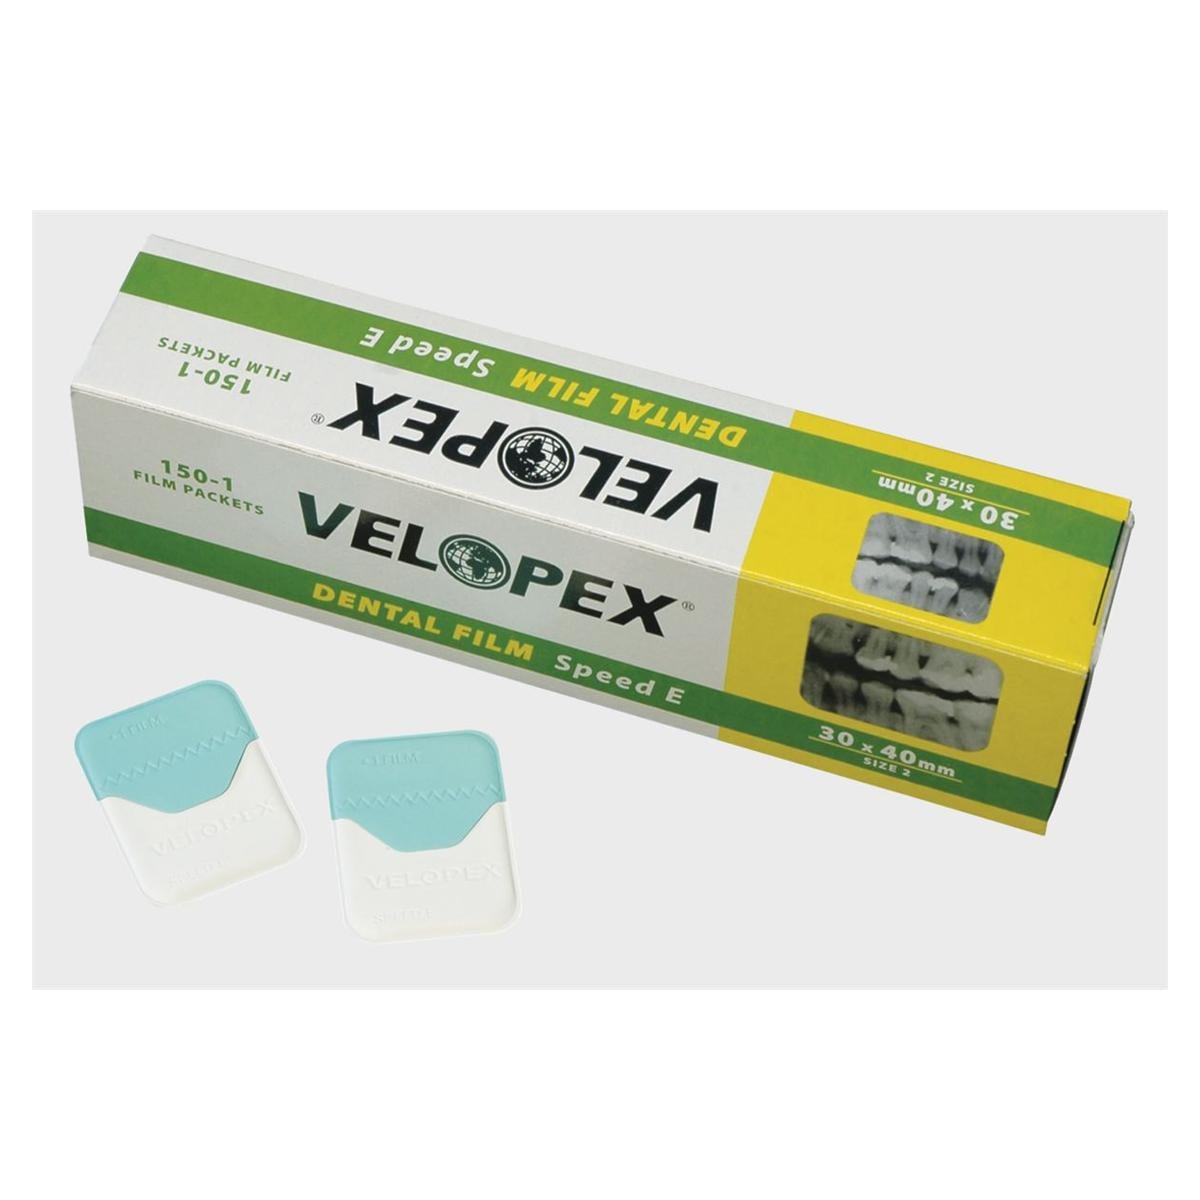 Velopex Adult X-Ray Film Speed E 30x40mm 150pk